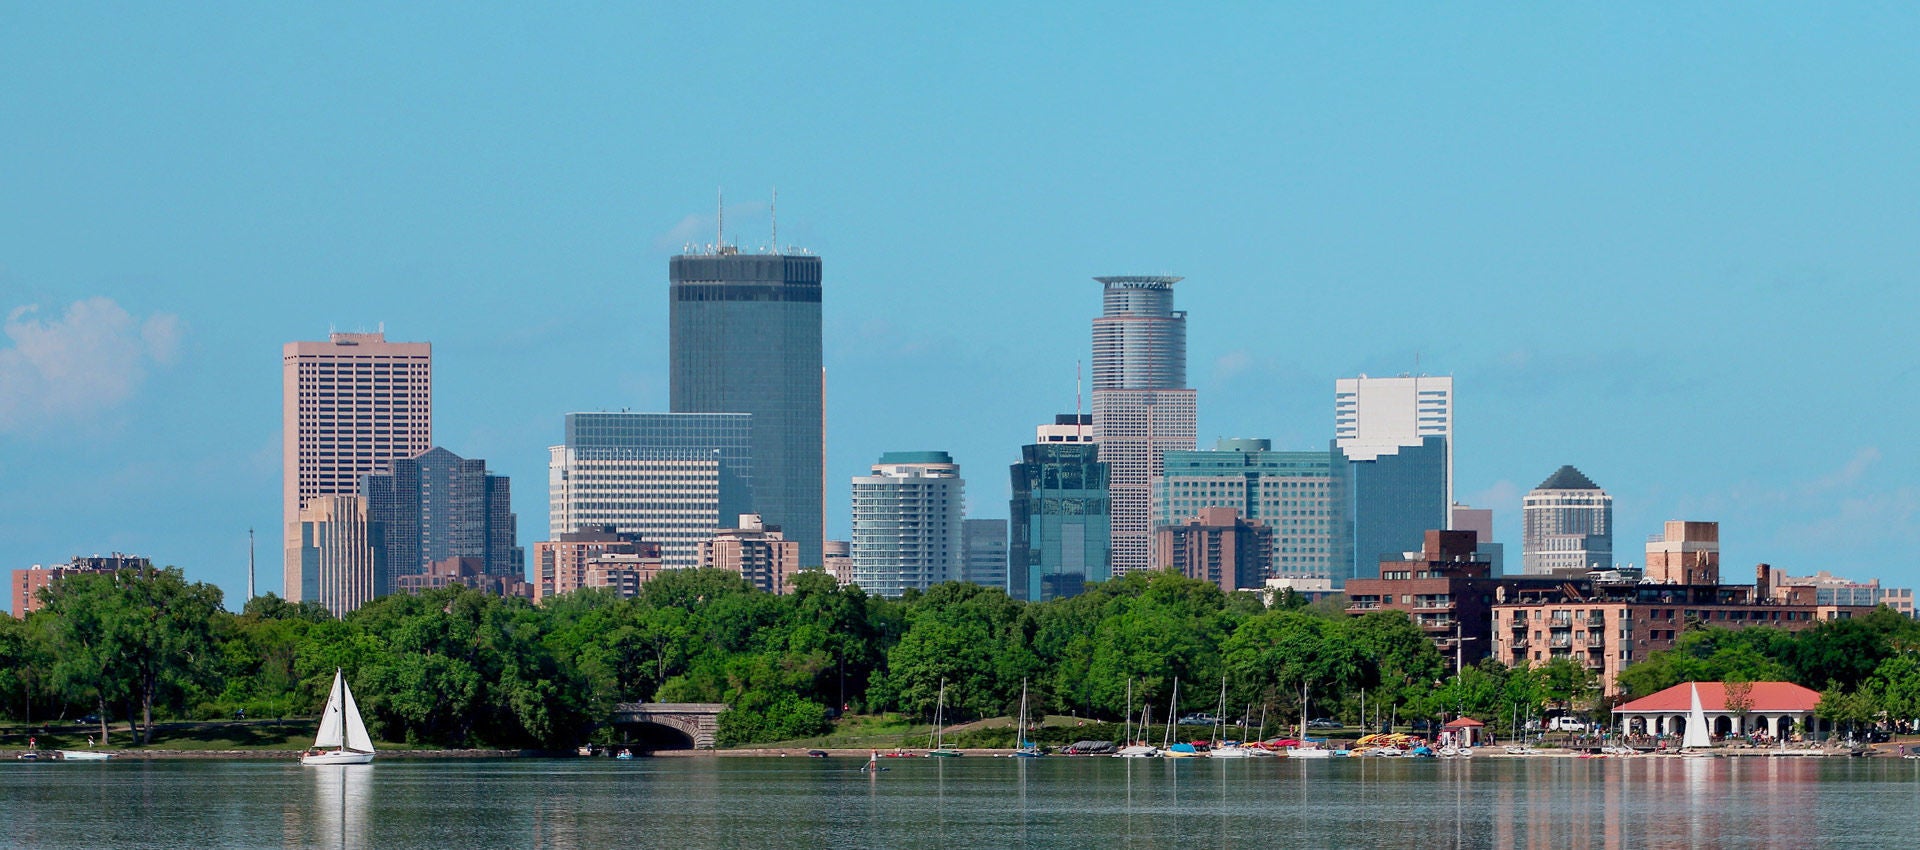 The Minneapolis skyline reflecting in Lake Calhoun on a warm summer day.